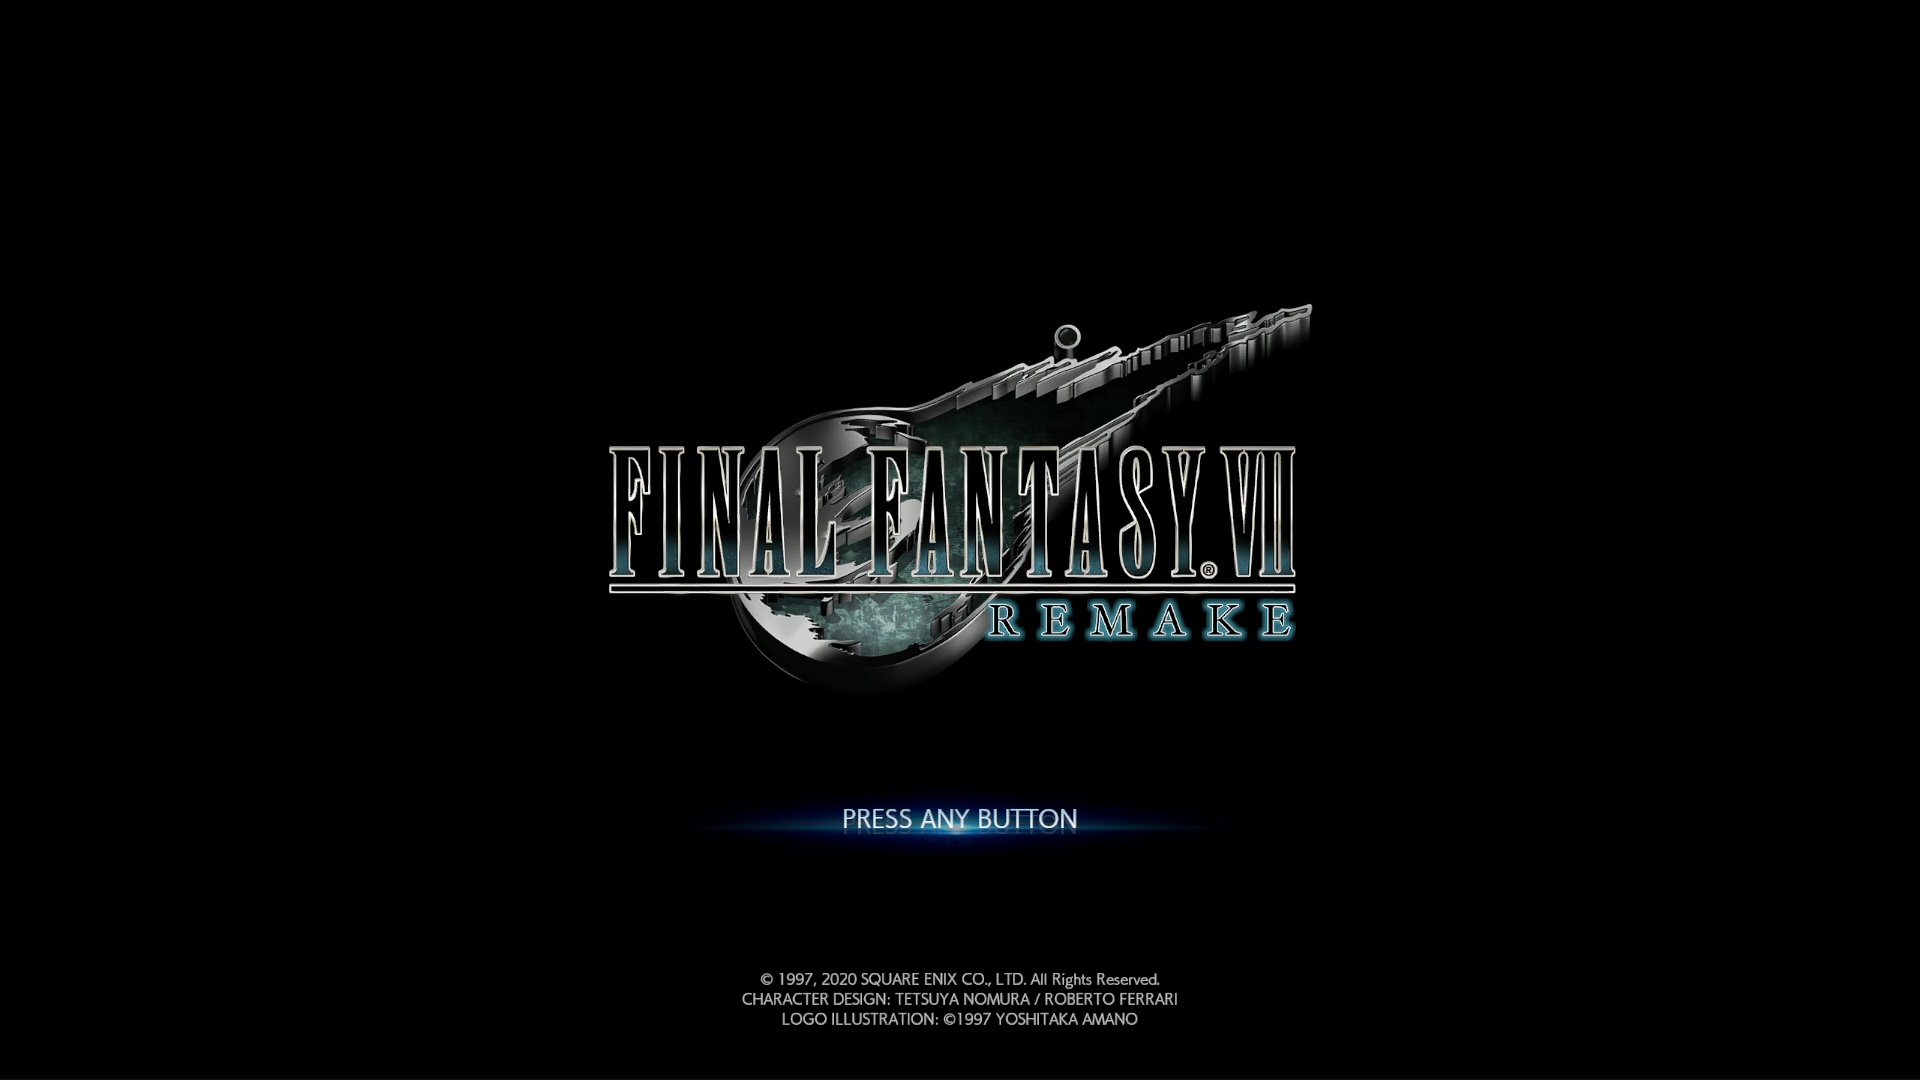 FF7リメイク 感想1話 『思い入れのあるFF』 | PS4超ゲーム評価と感想 